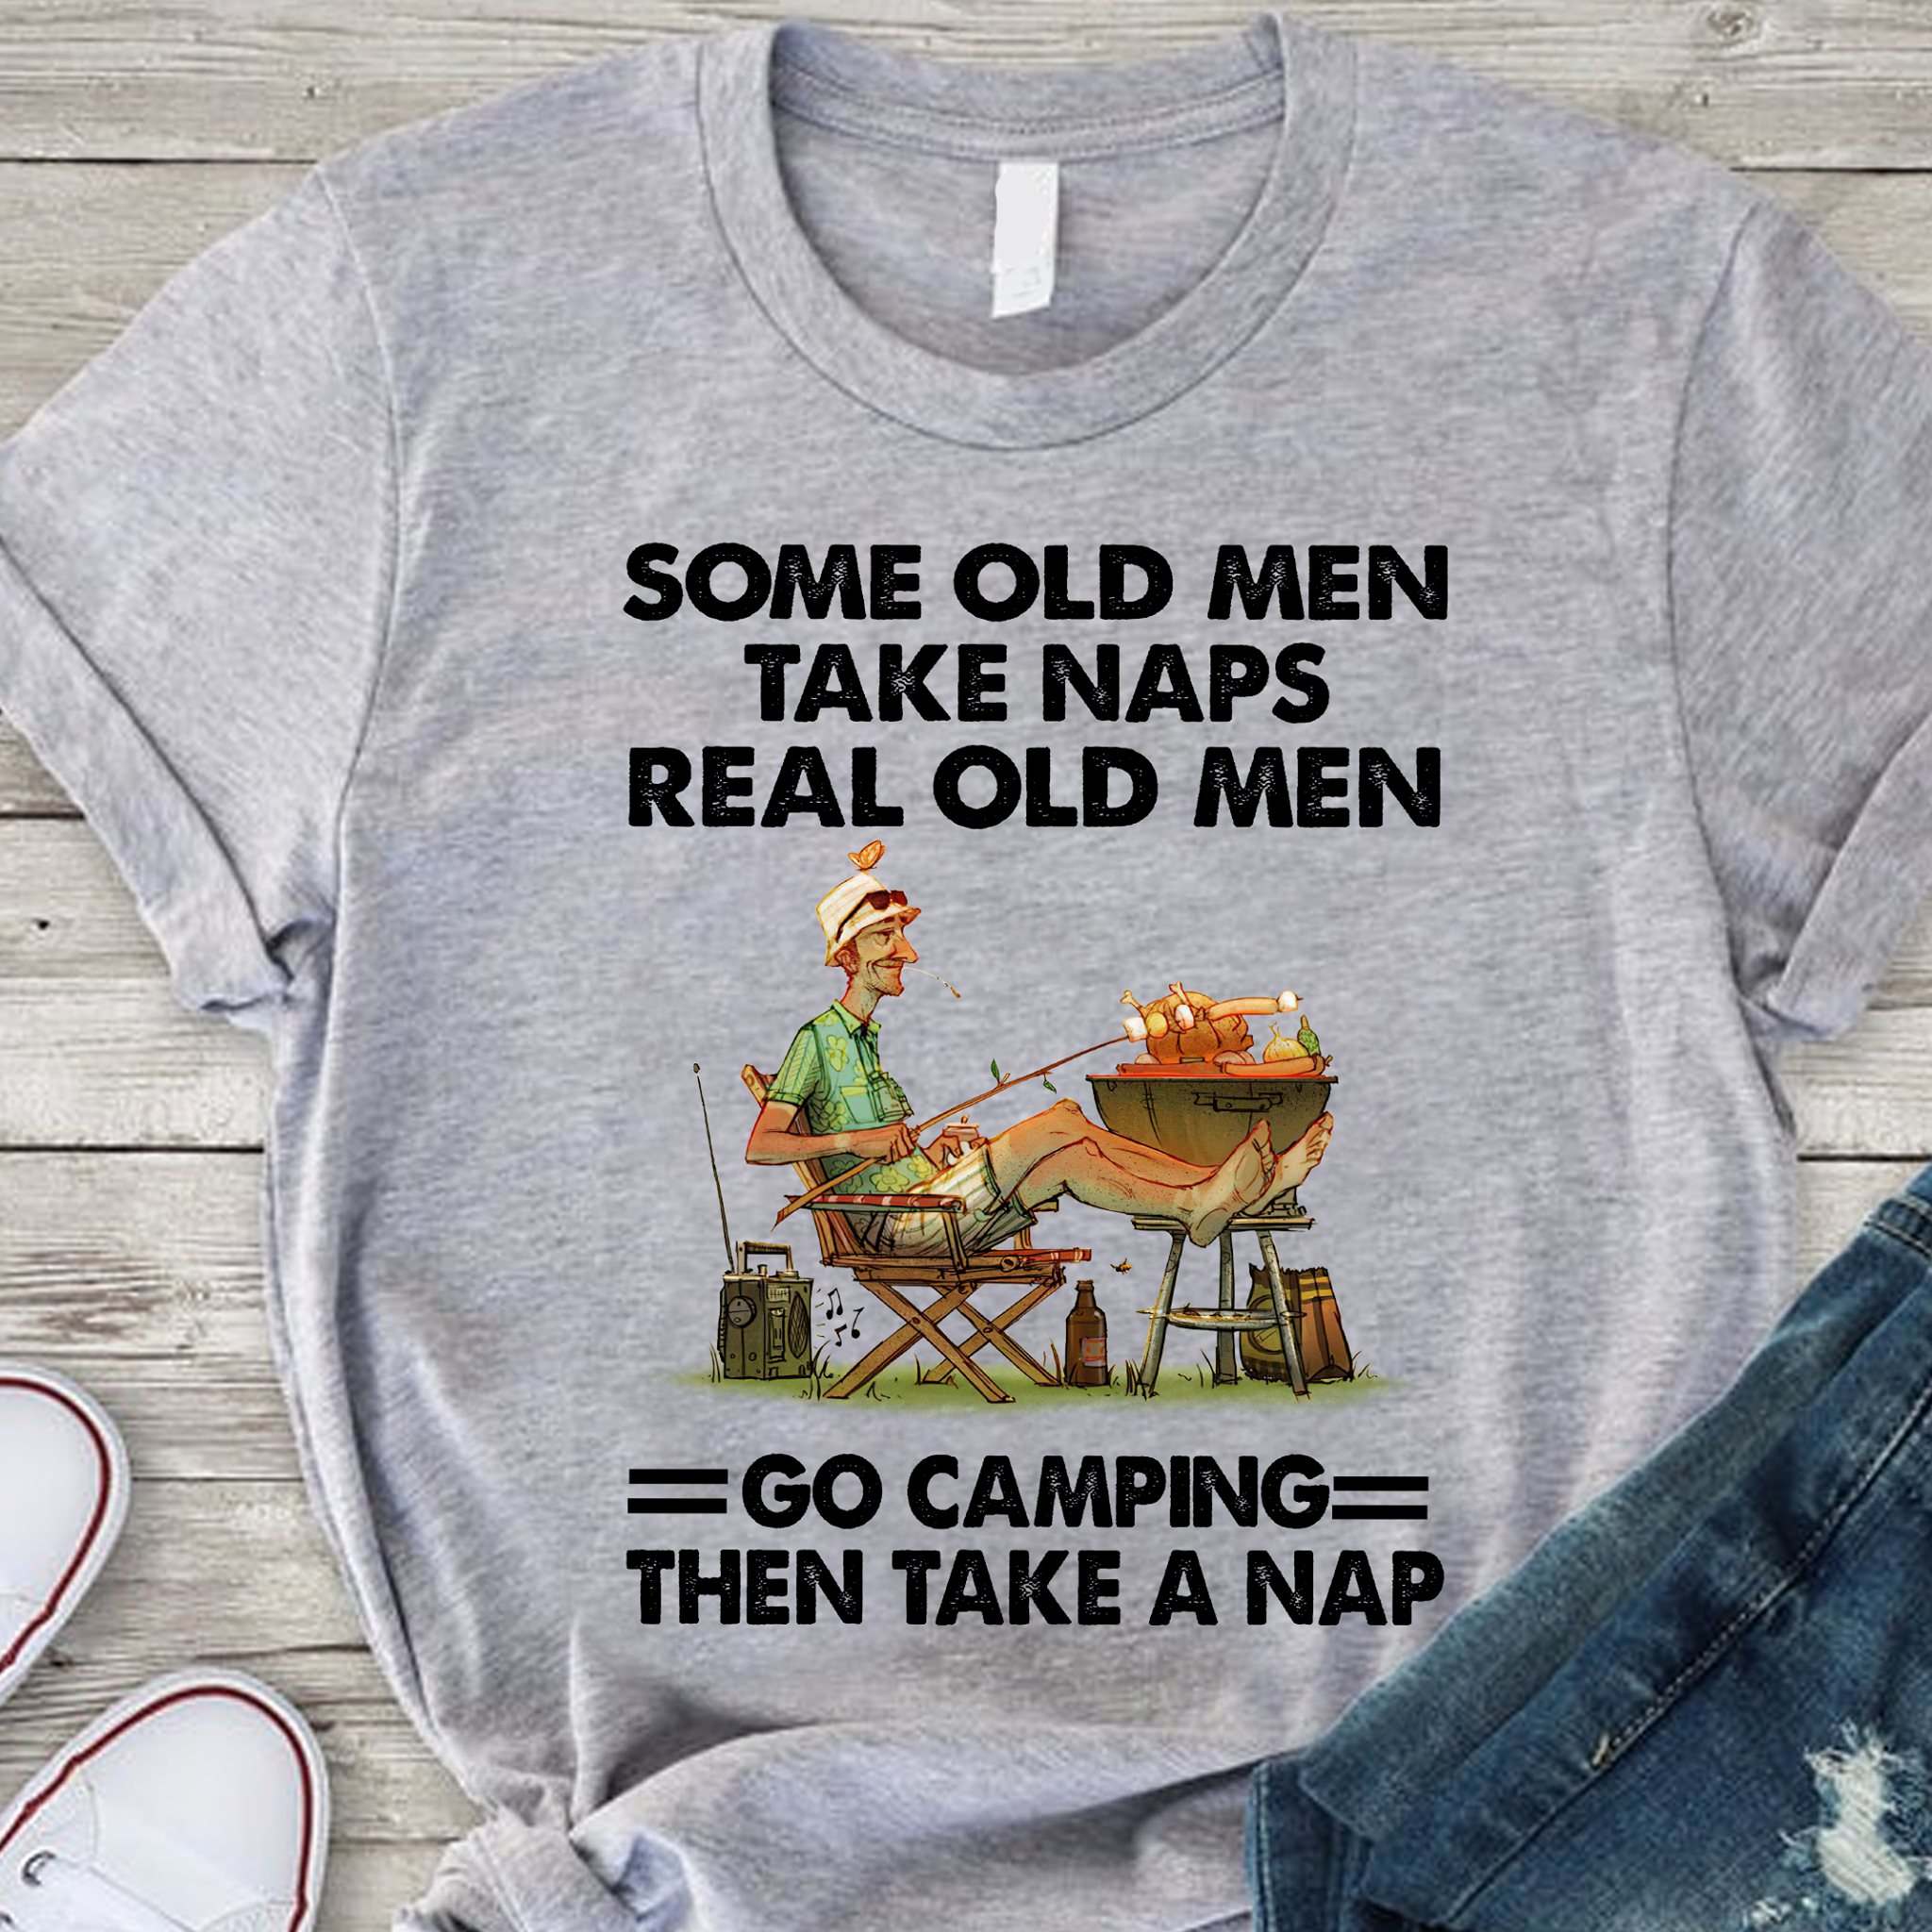 Some old men take naps real old men go camping then take a nap - Old men camping